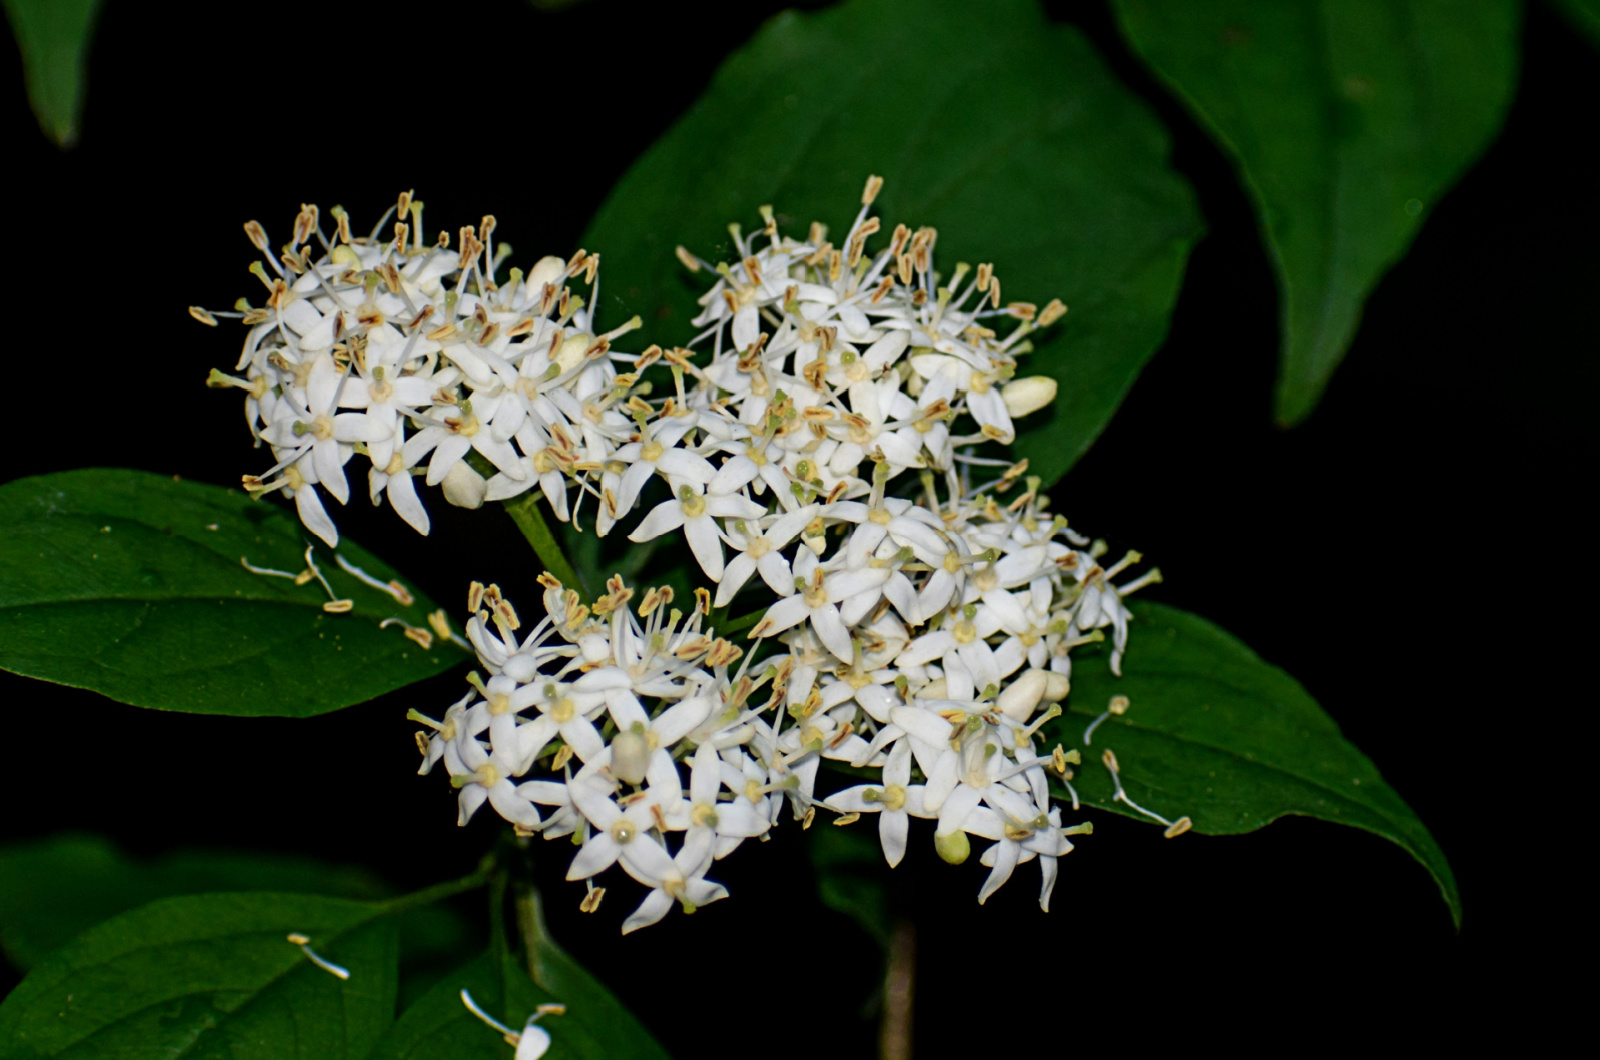 Swamp dogwood flower